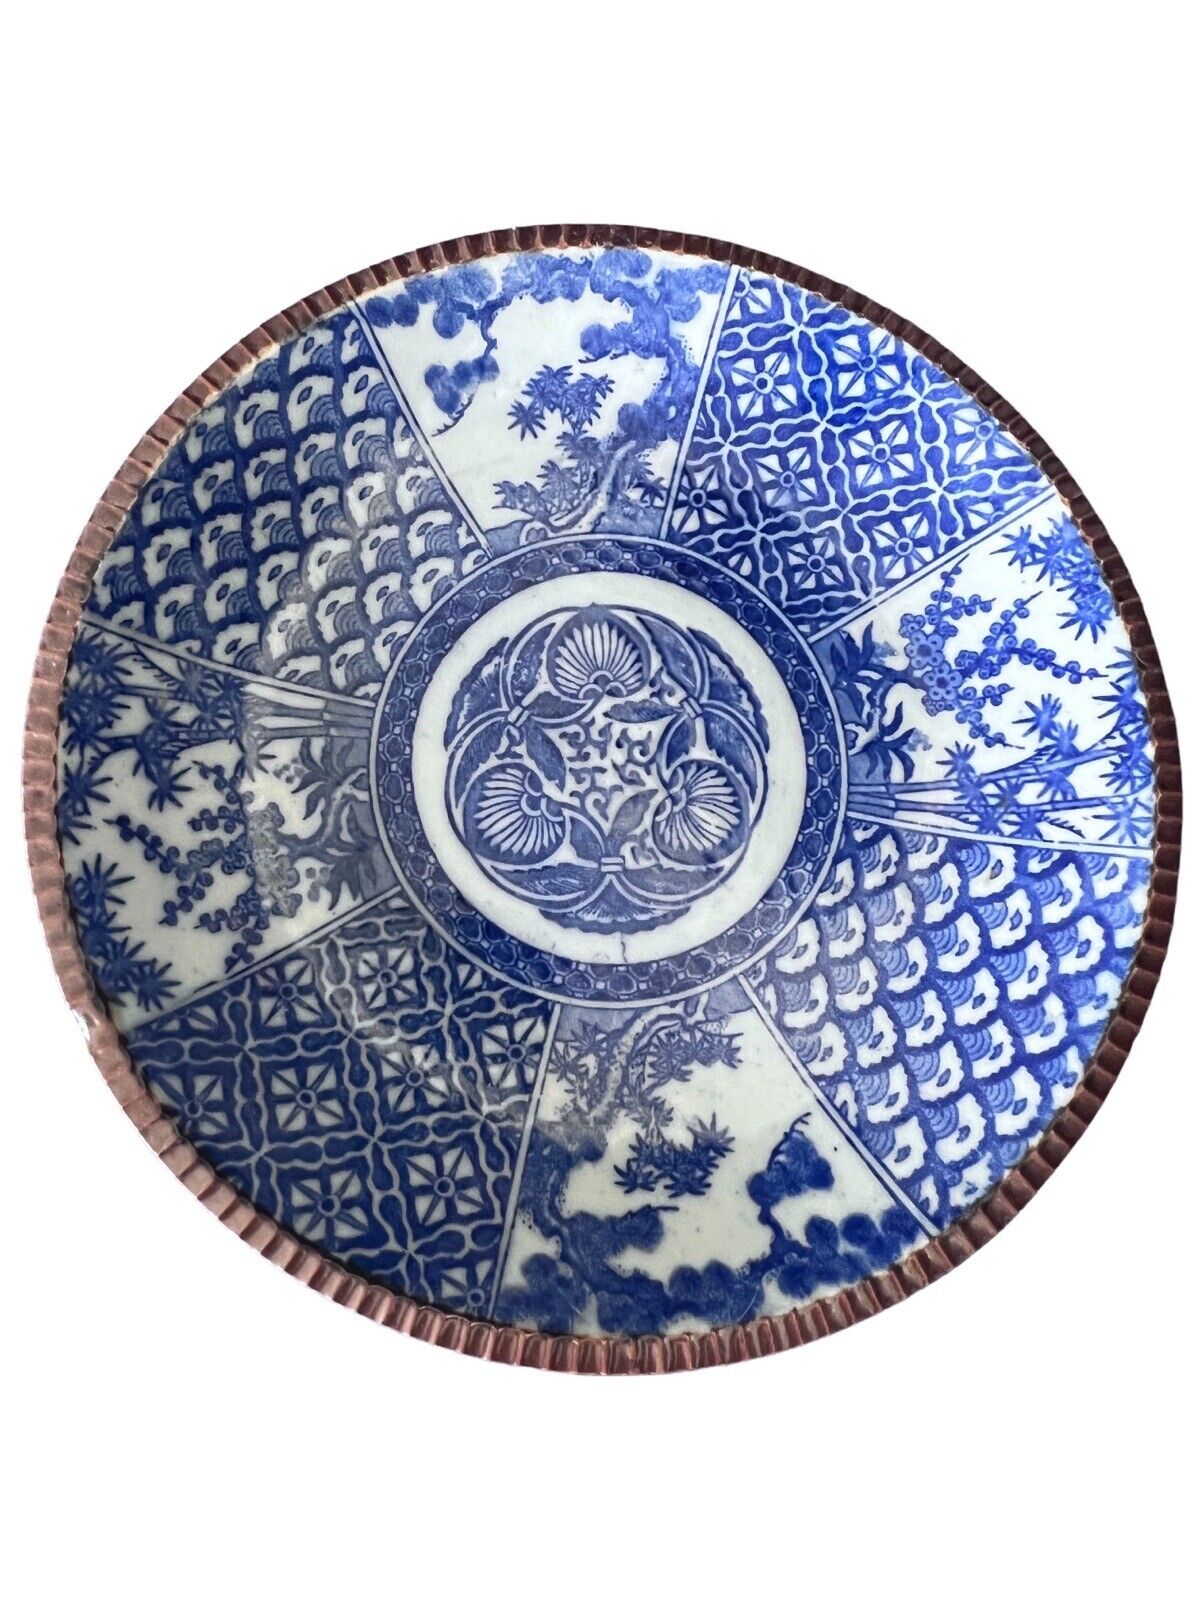 19c Plate Antique Meiji Japanese Igezara Blue White Brown Pie Crust Edge 12”